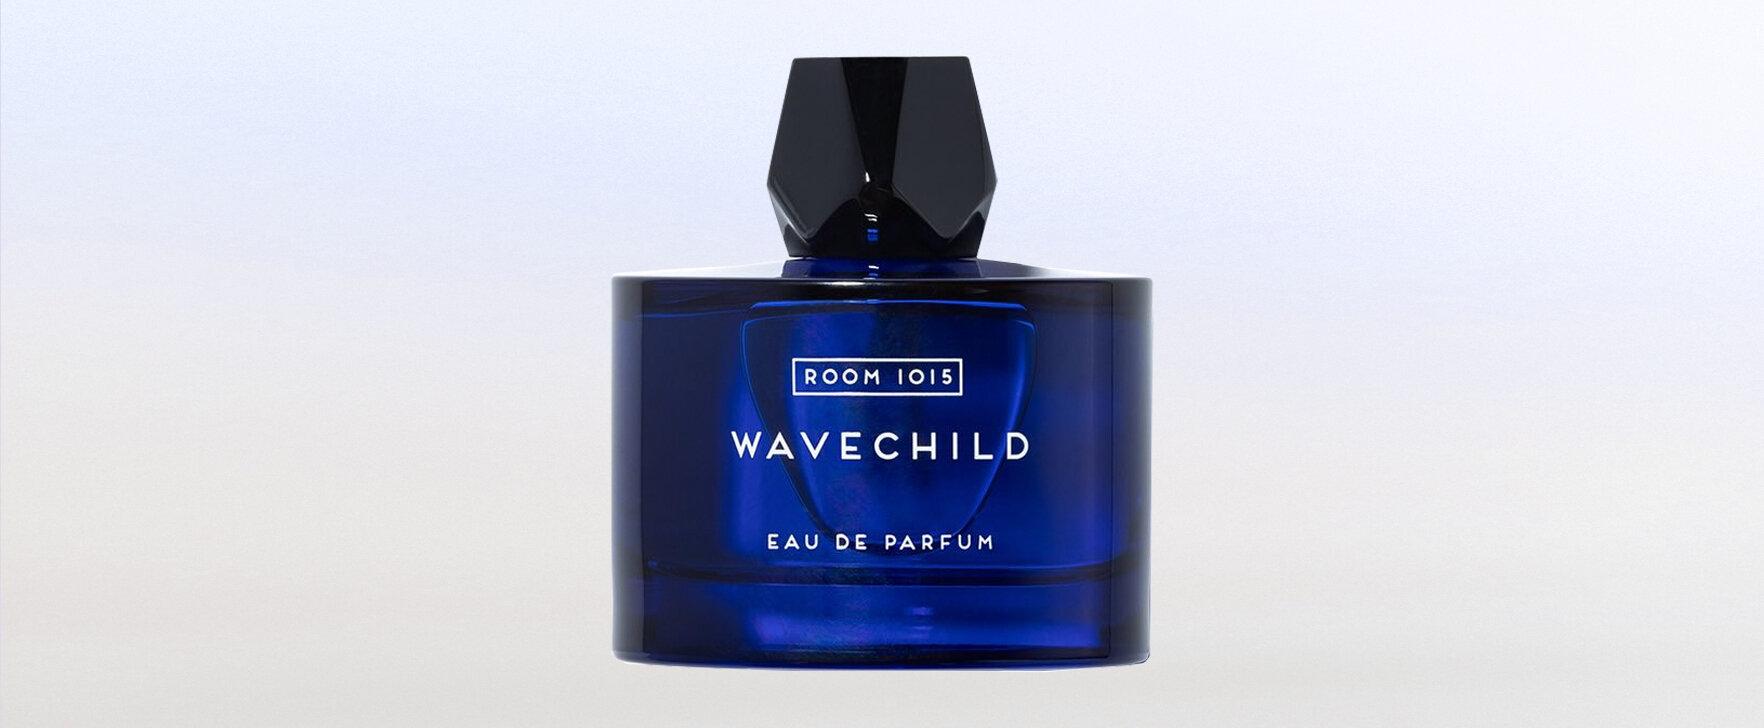 A Declaration of Love to Surfing: The New Eau de Parfum "Wavechild" by Room 1015